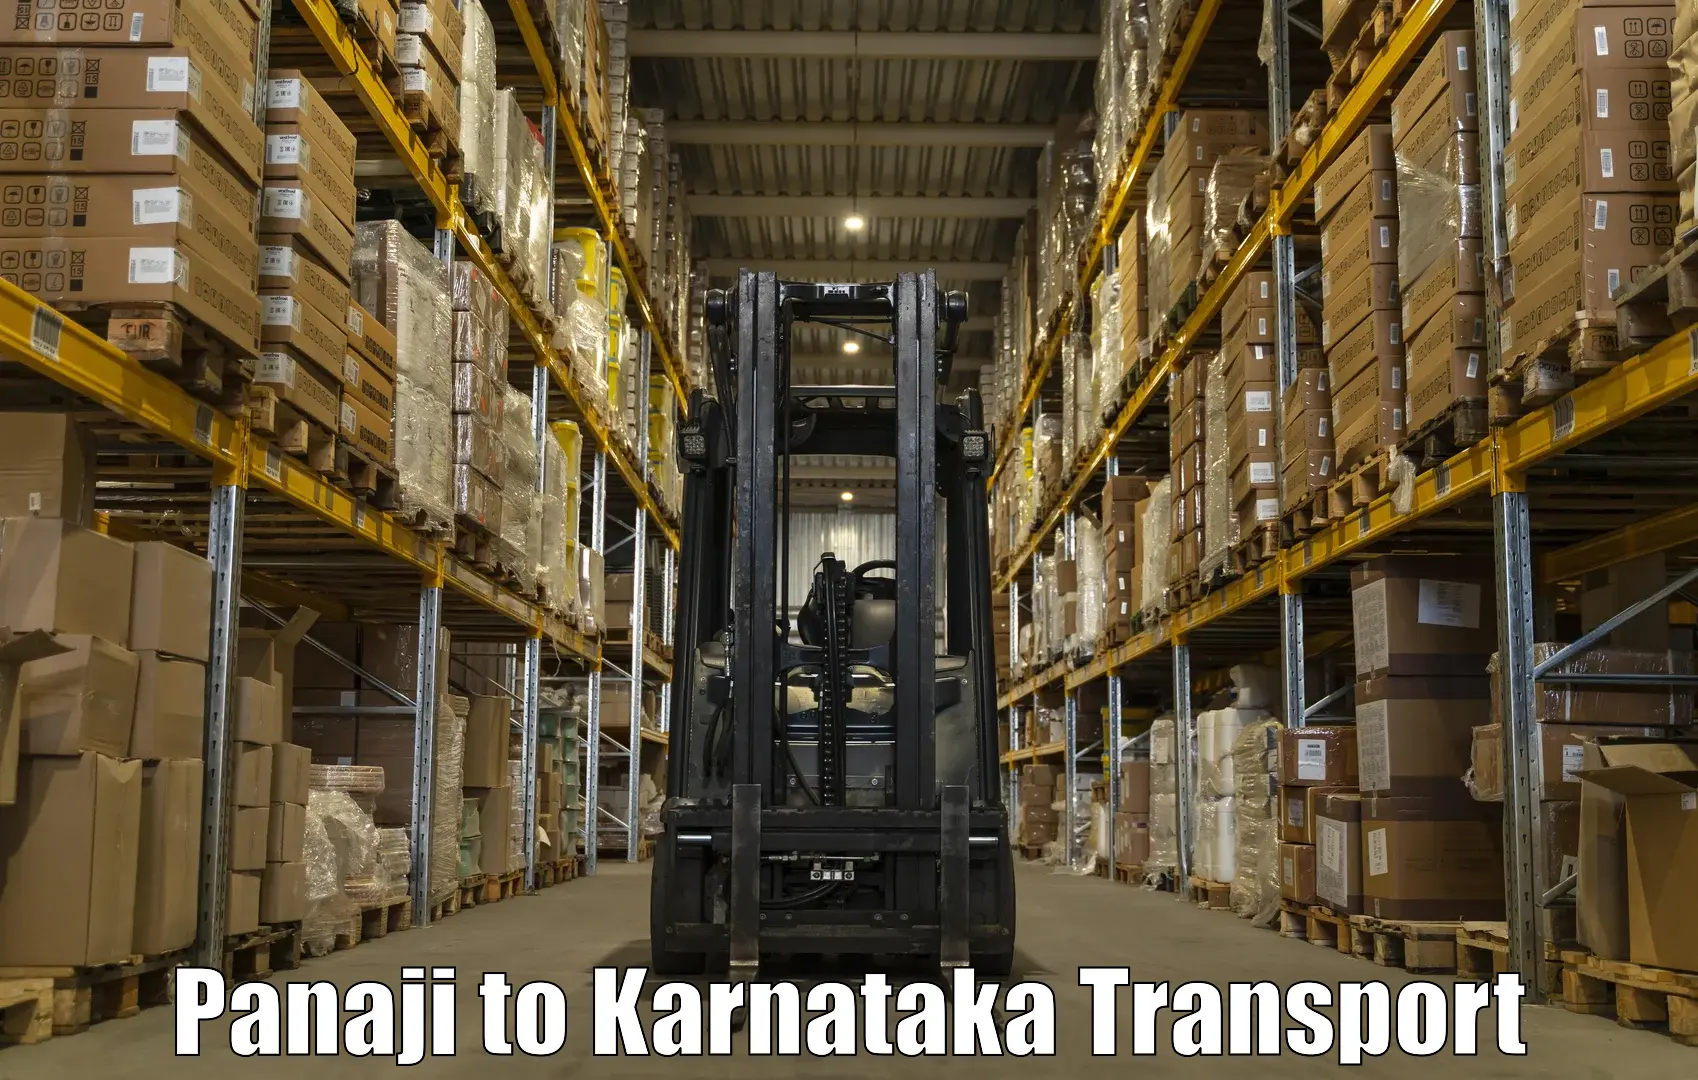 Truck transport companies in India Panaji to Kulshekar